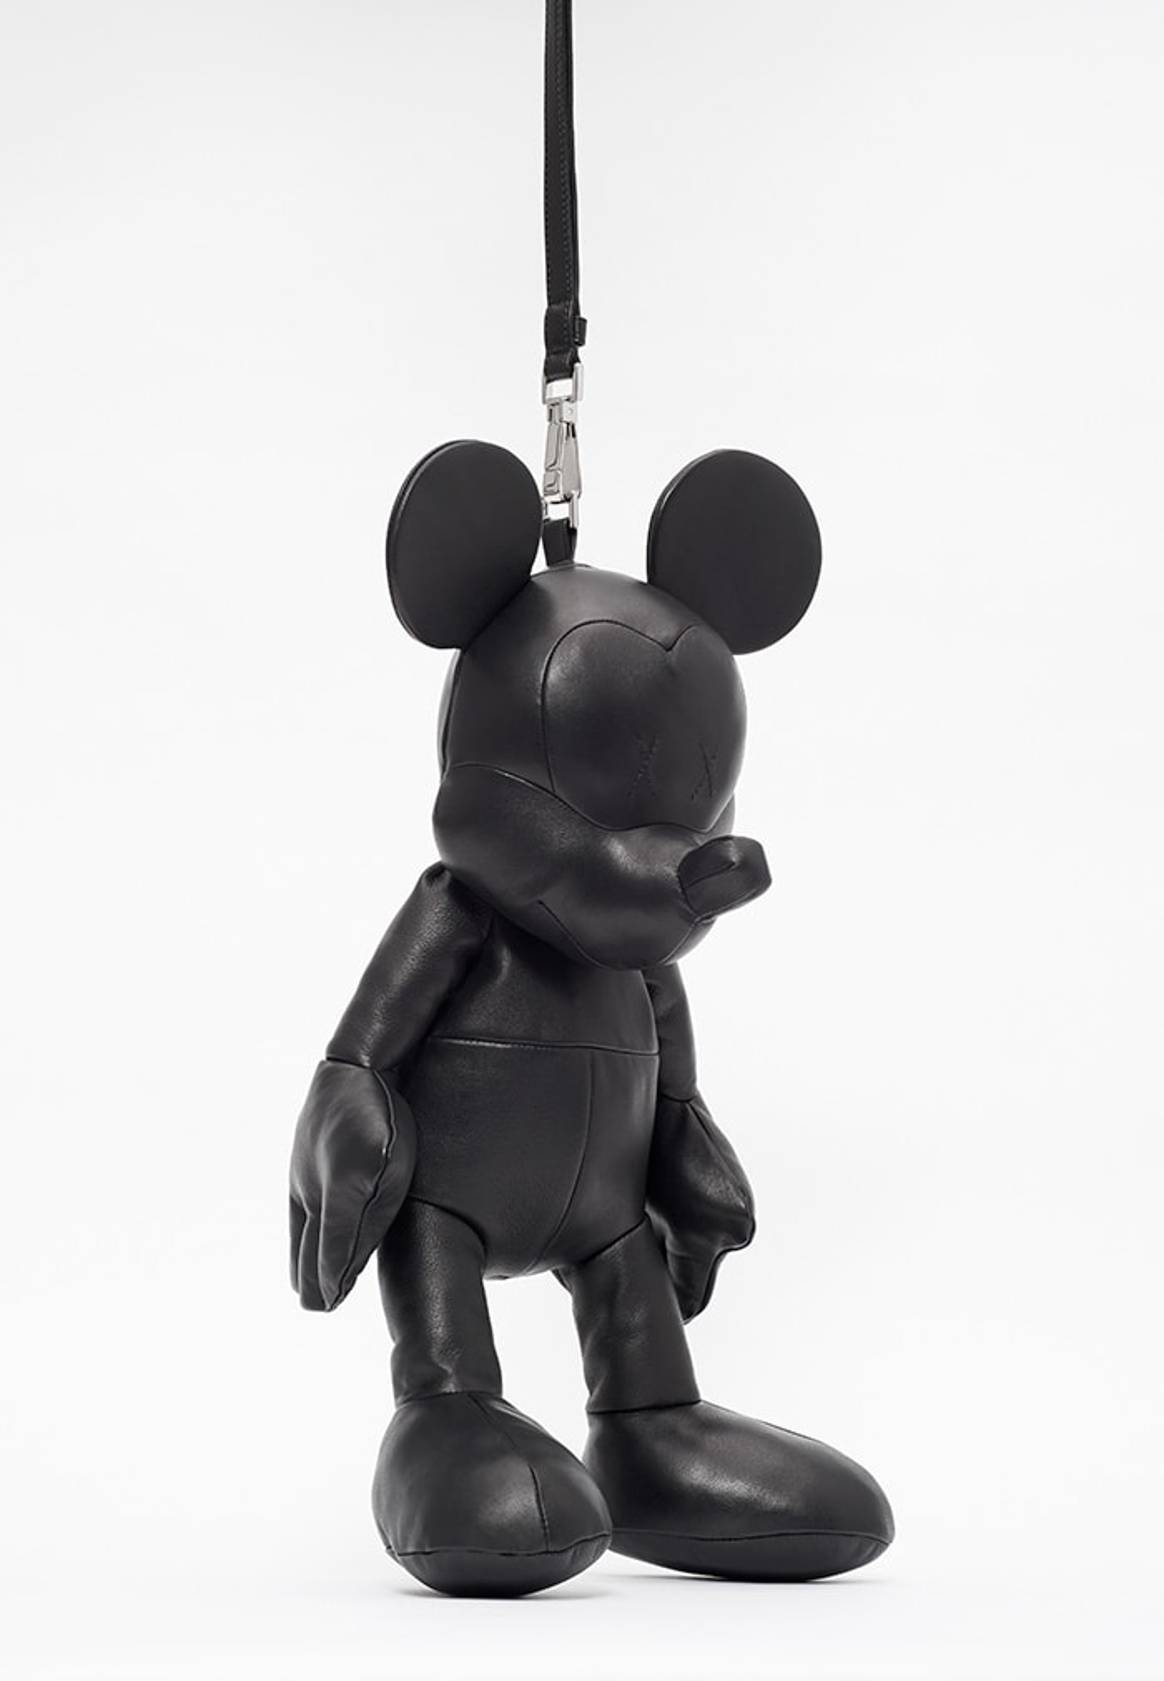 Christopher Raeburn Womens Mickey Mouse Bag Denim